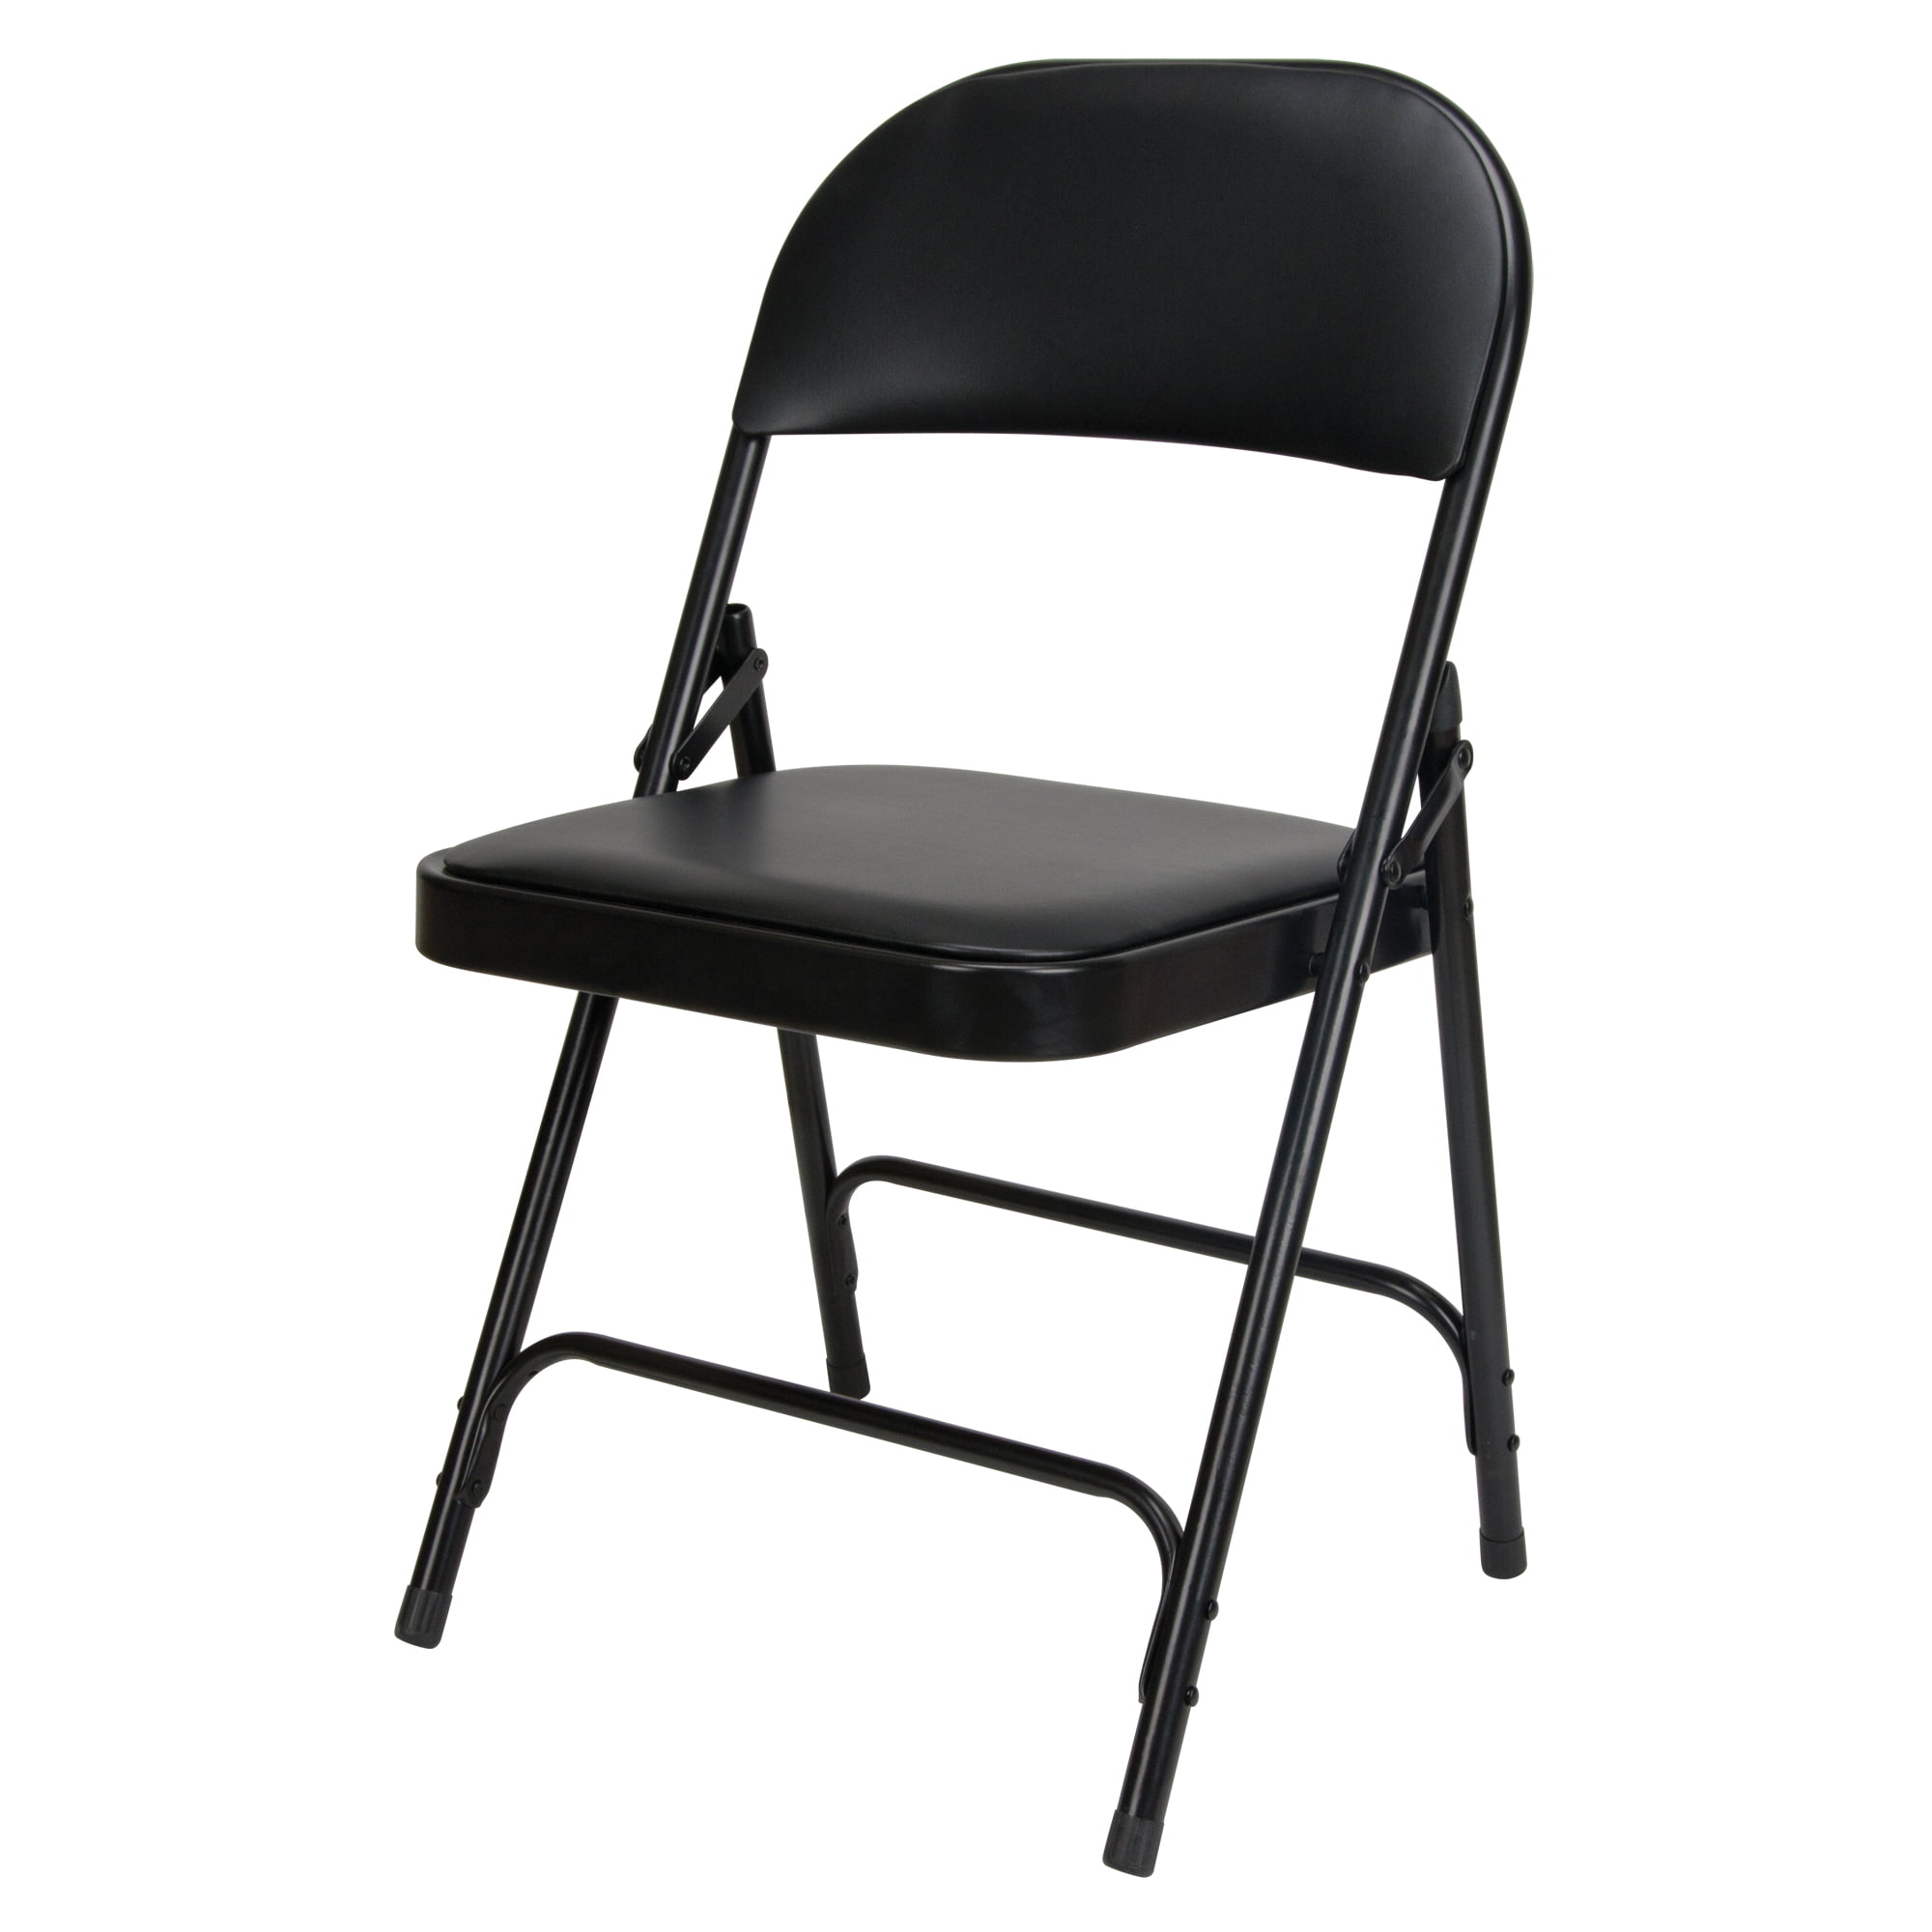 Kleton Steel Folding Chair, 300 lbs Capacity, Black, Padded Seat